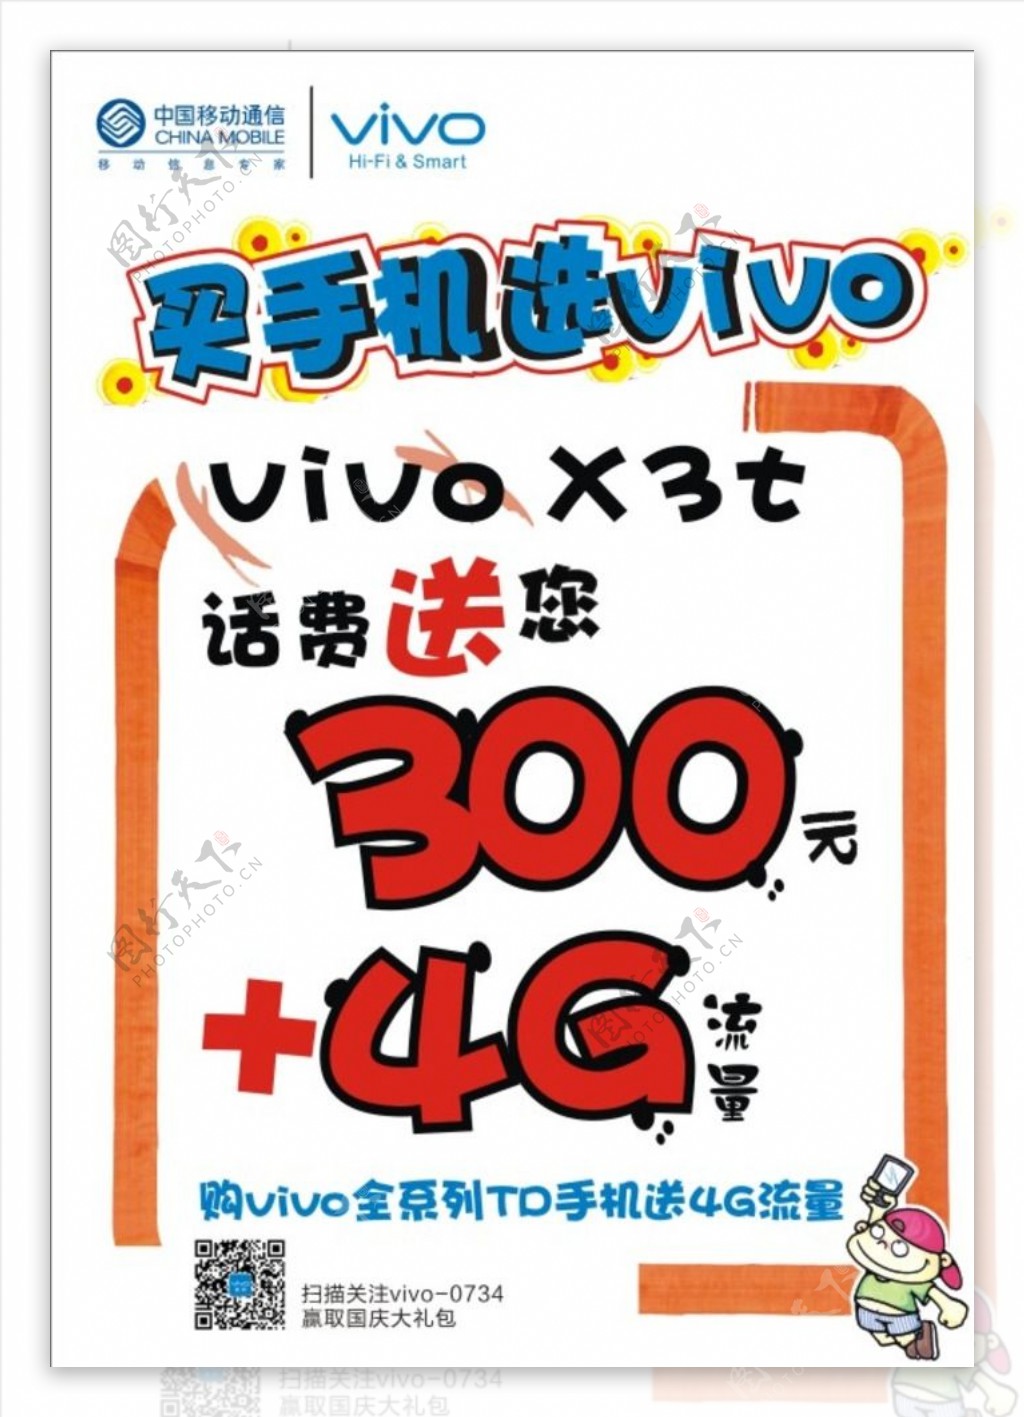 vivoX3t海报图片